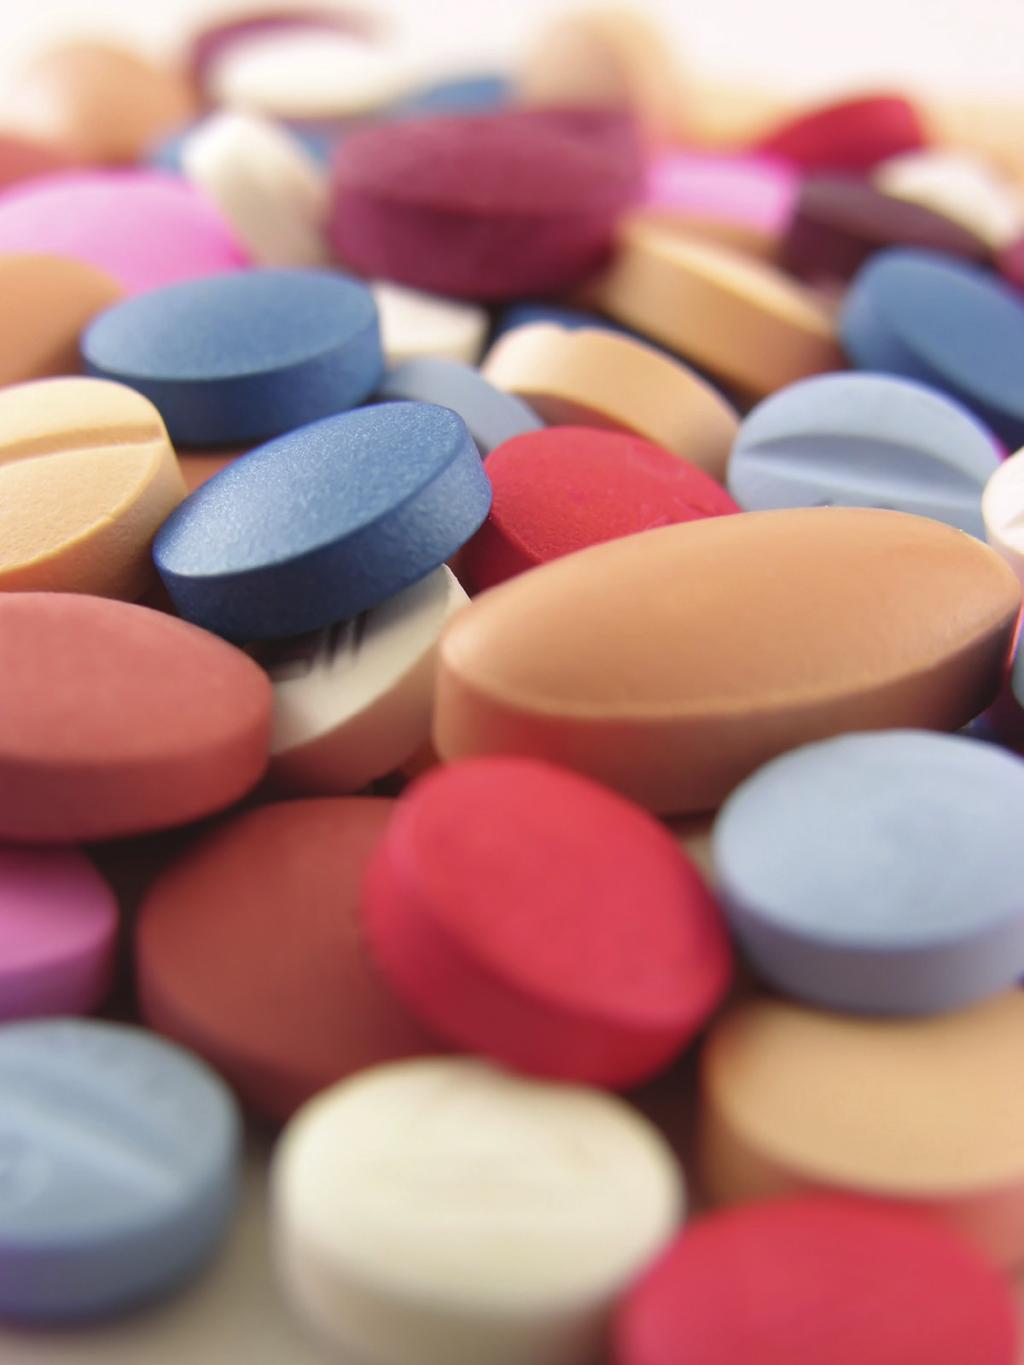 Today the most common first choice of medication is a SSRI 1, i.e. Citalopram, Escitalopram, Fluvoxamine, Paroxetine, Sertraline, Fluoxetine.